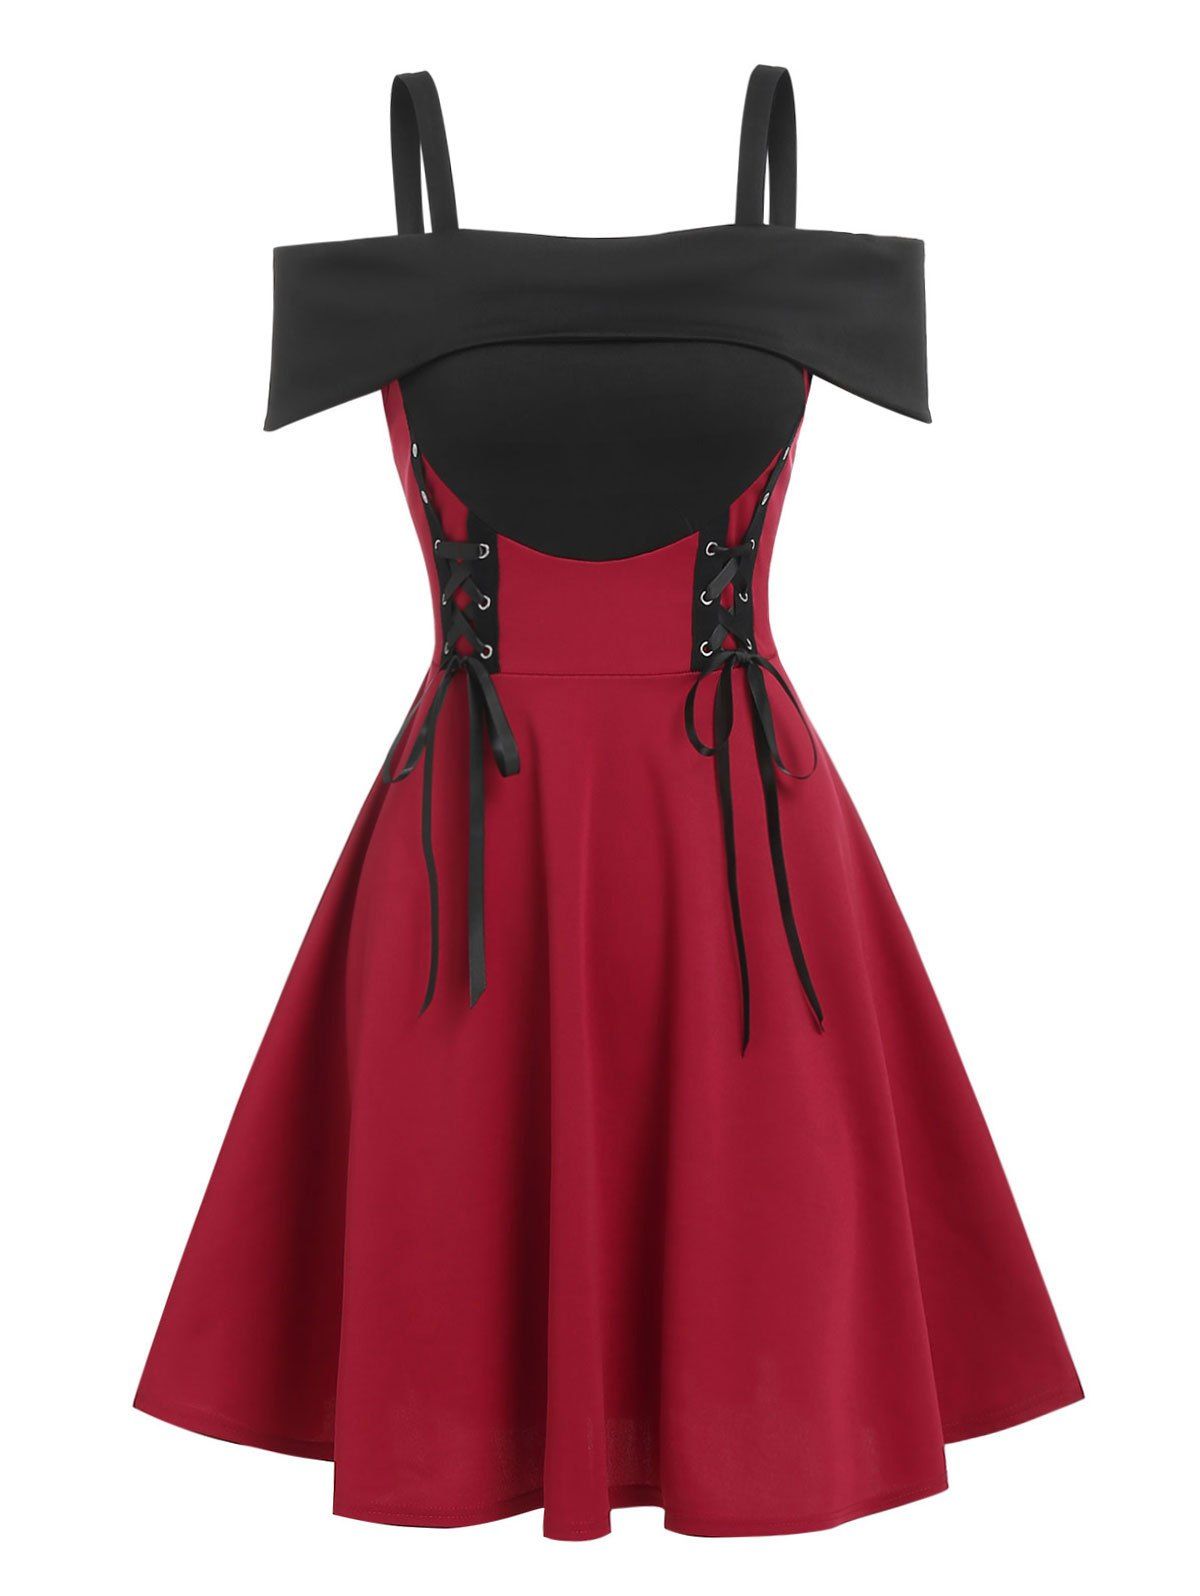 Plaid Cold Shoulder Lace Up Dress - RED 3XL